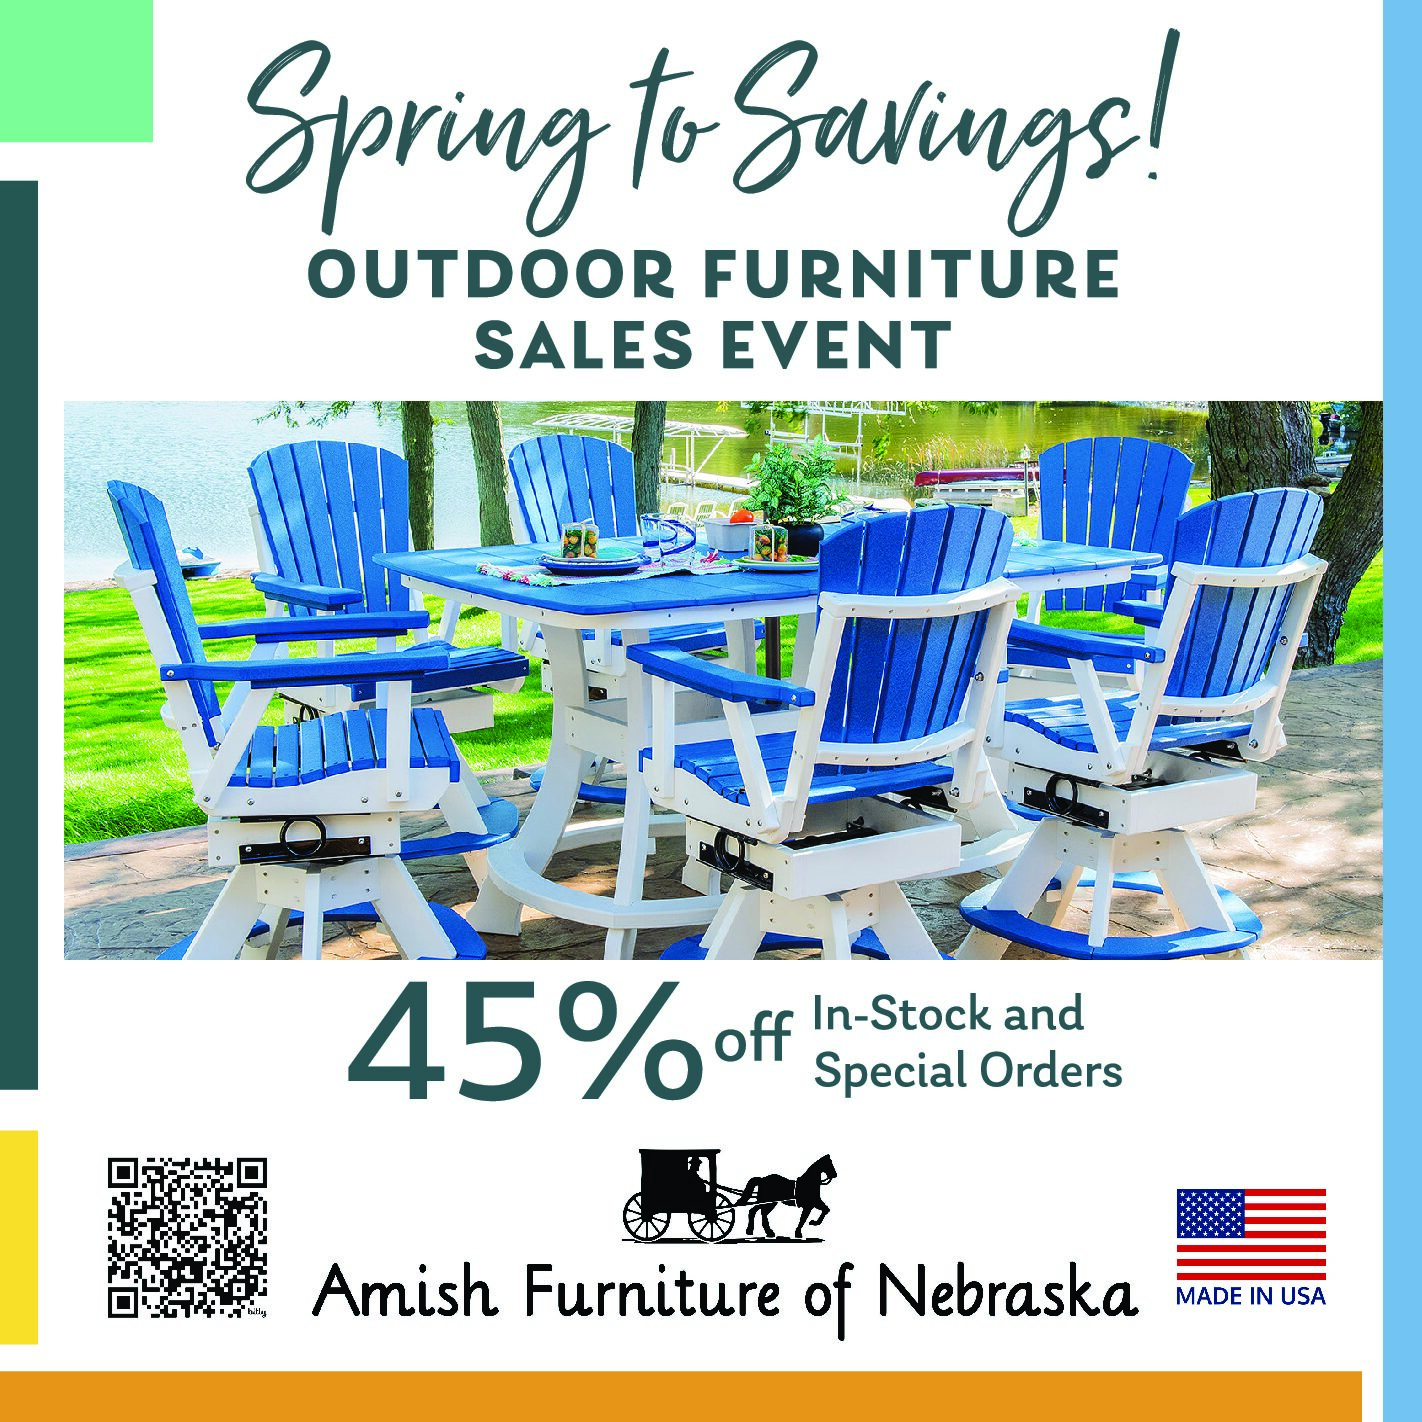 Outdoor Furniture Sales Event at Amish Furniture of Nebraska